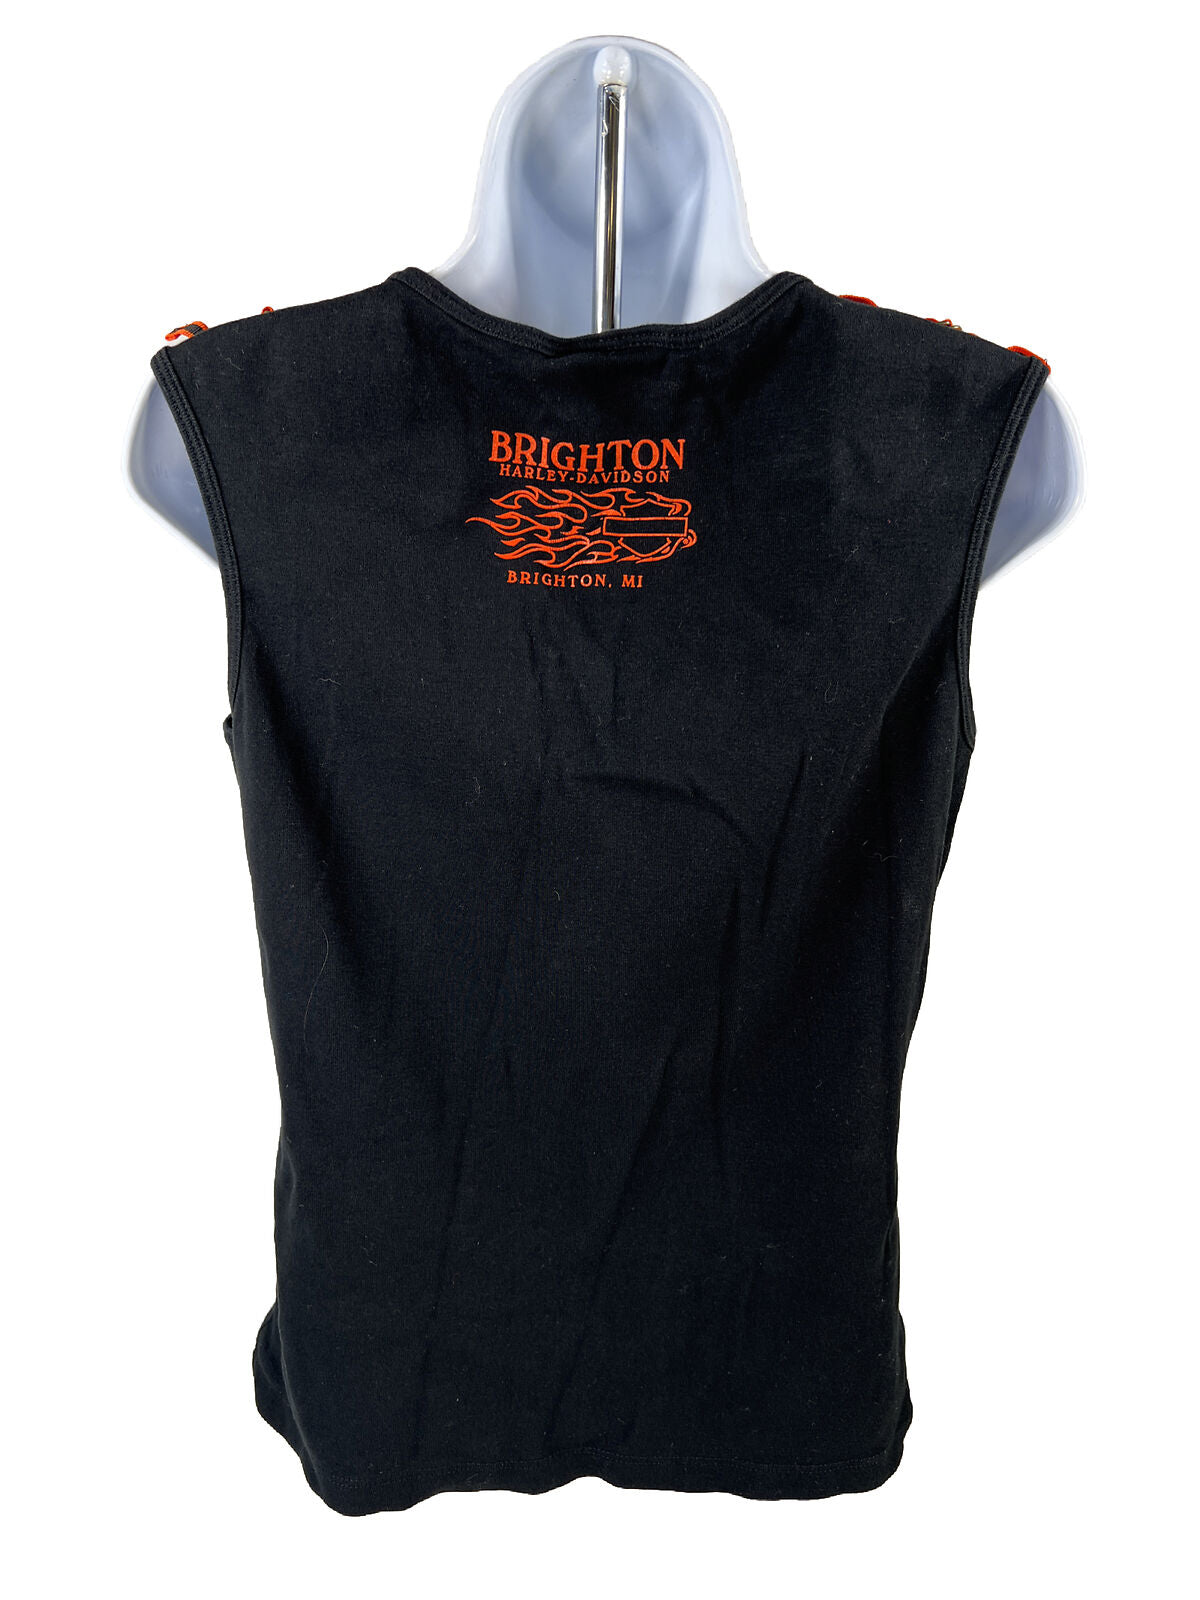 Harley Davidson Women's Black/Orange Sleeveless Brighton MI Tank Top - L